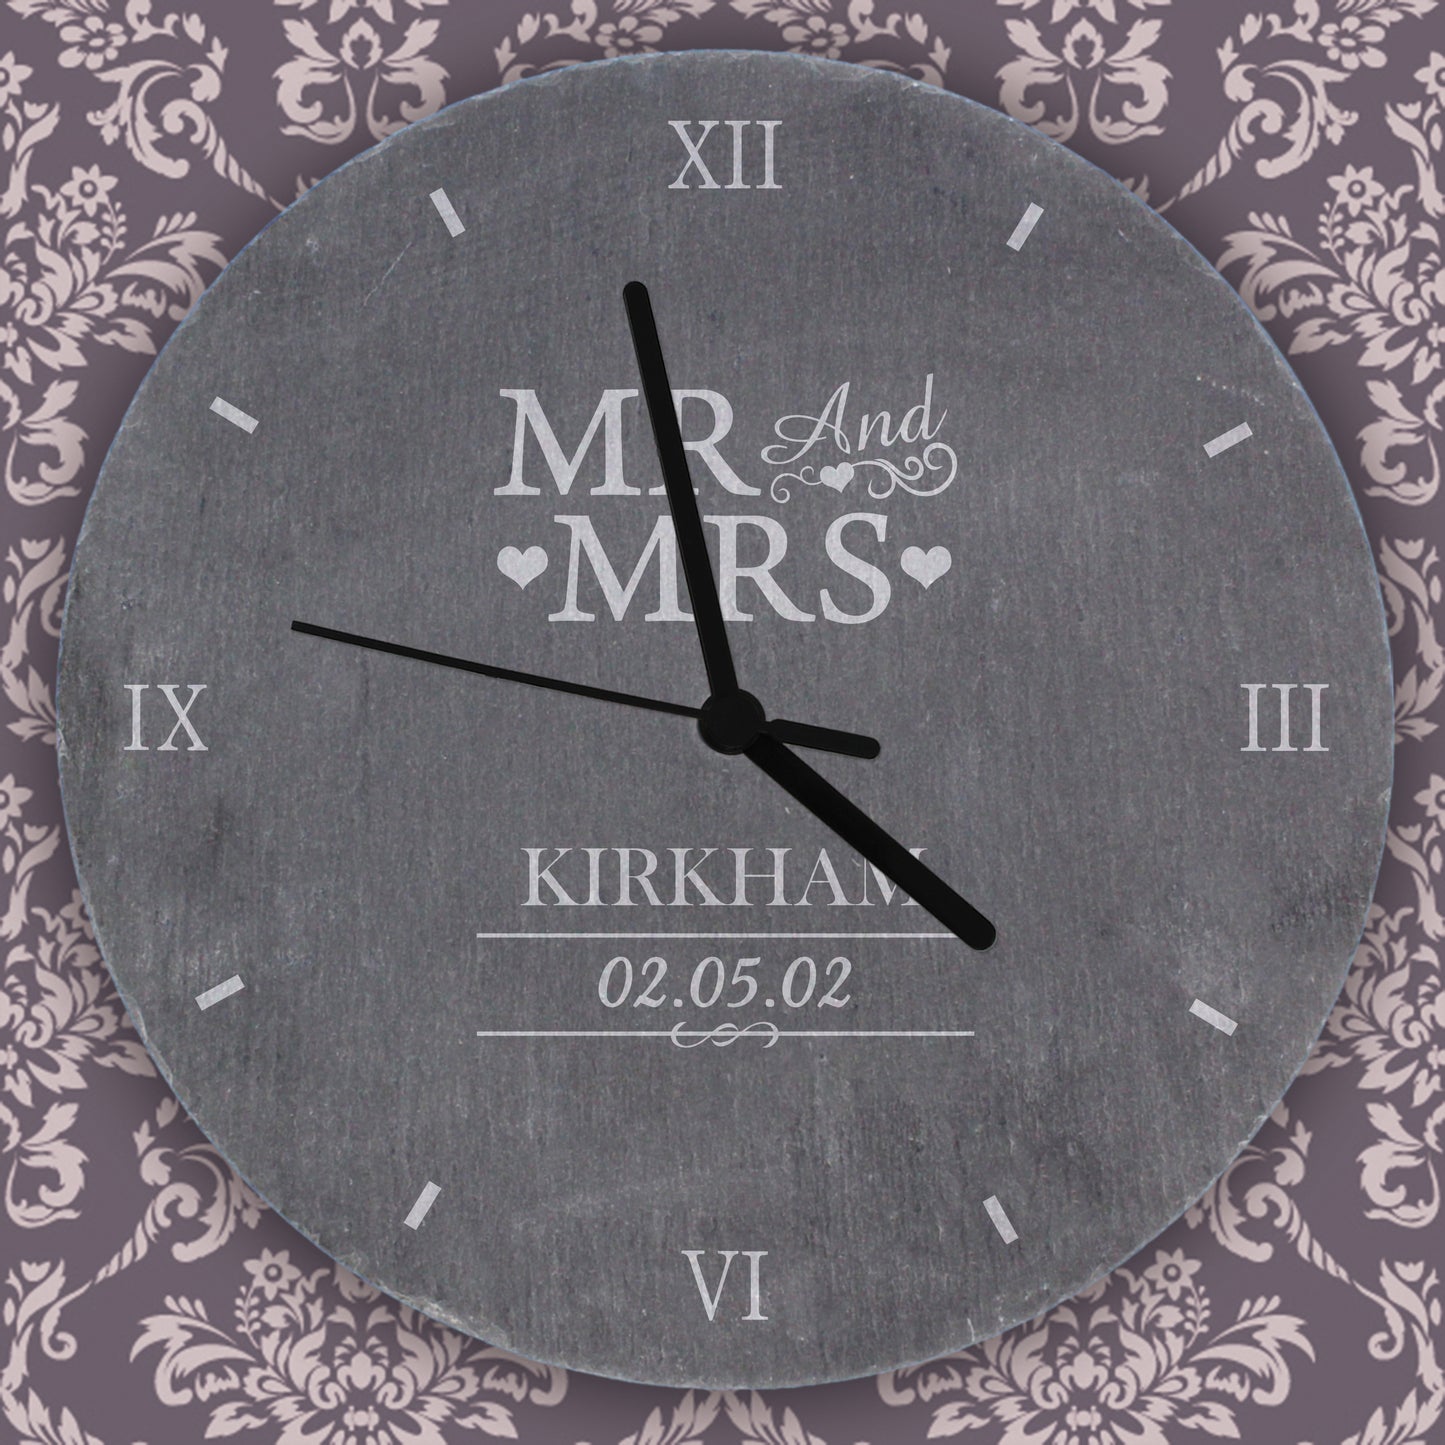 Personalised Mr & Mrs Slate Clock - Personalise It!